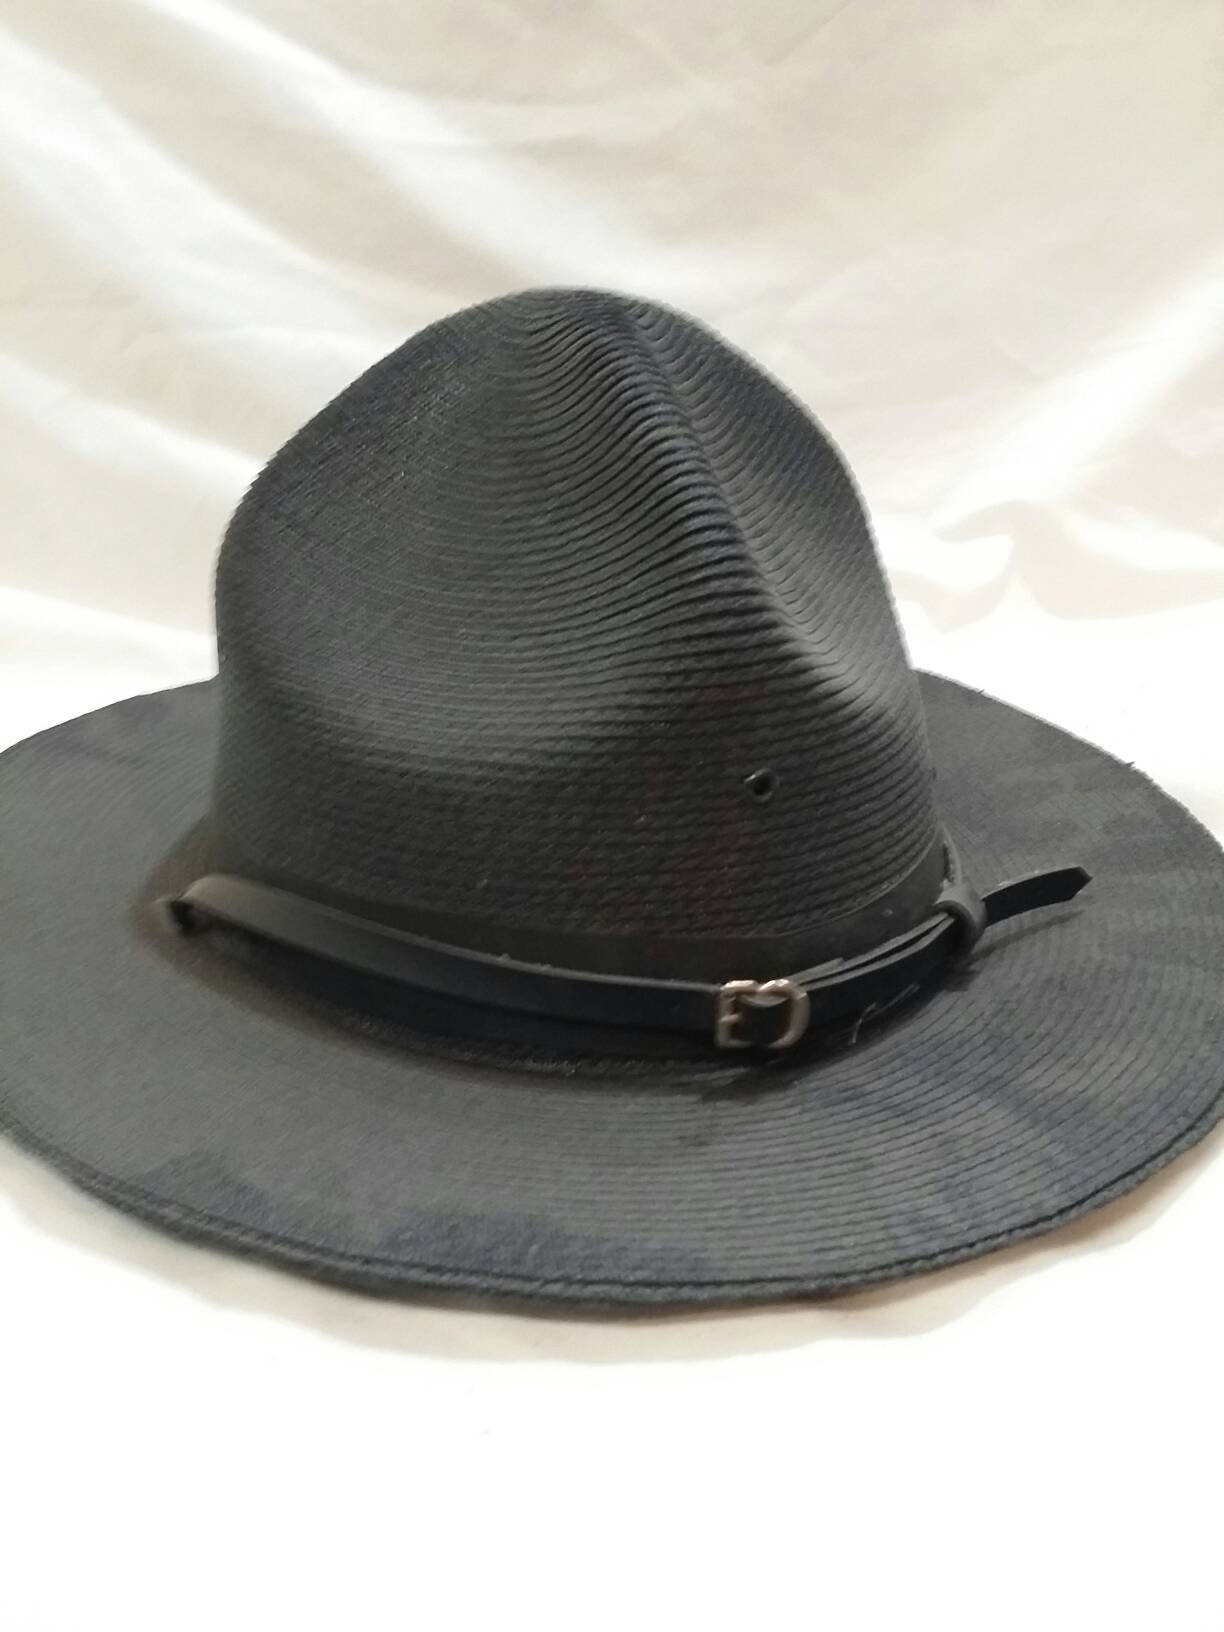 rcmp policeman's hat